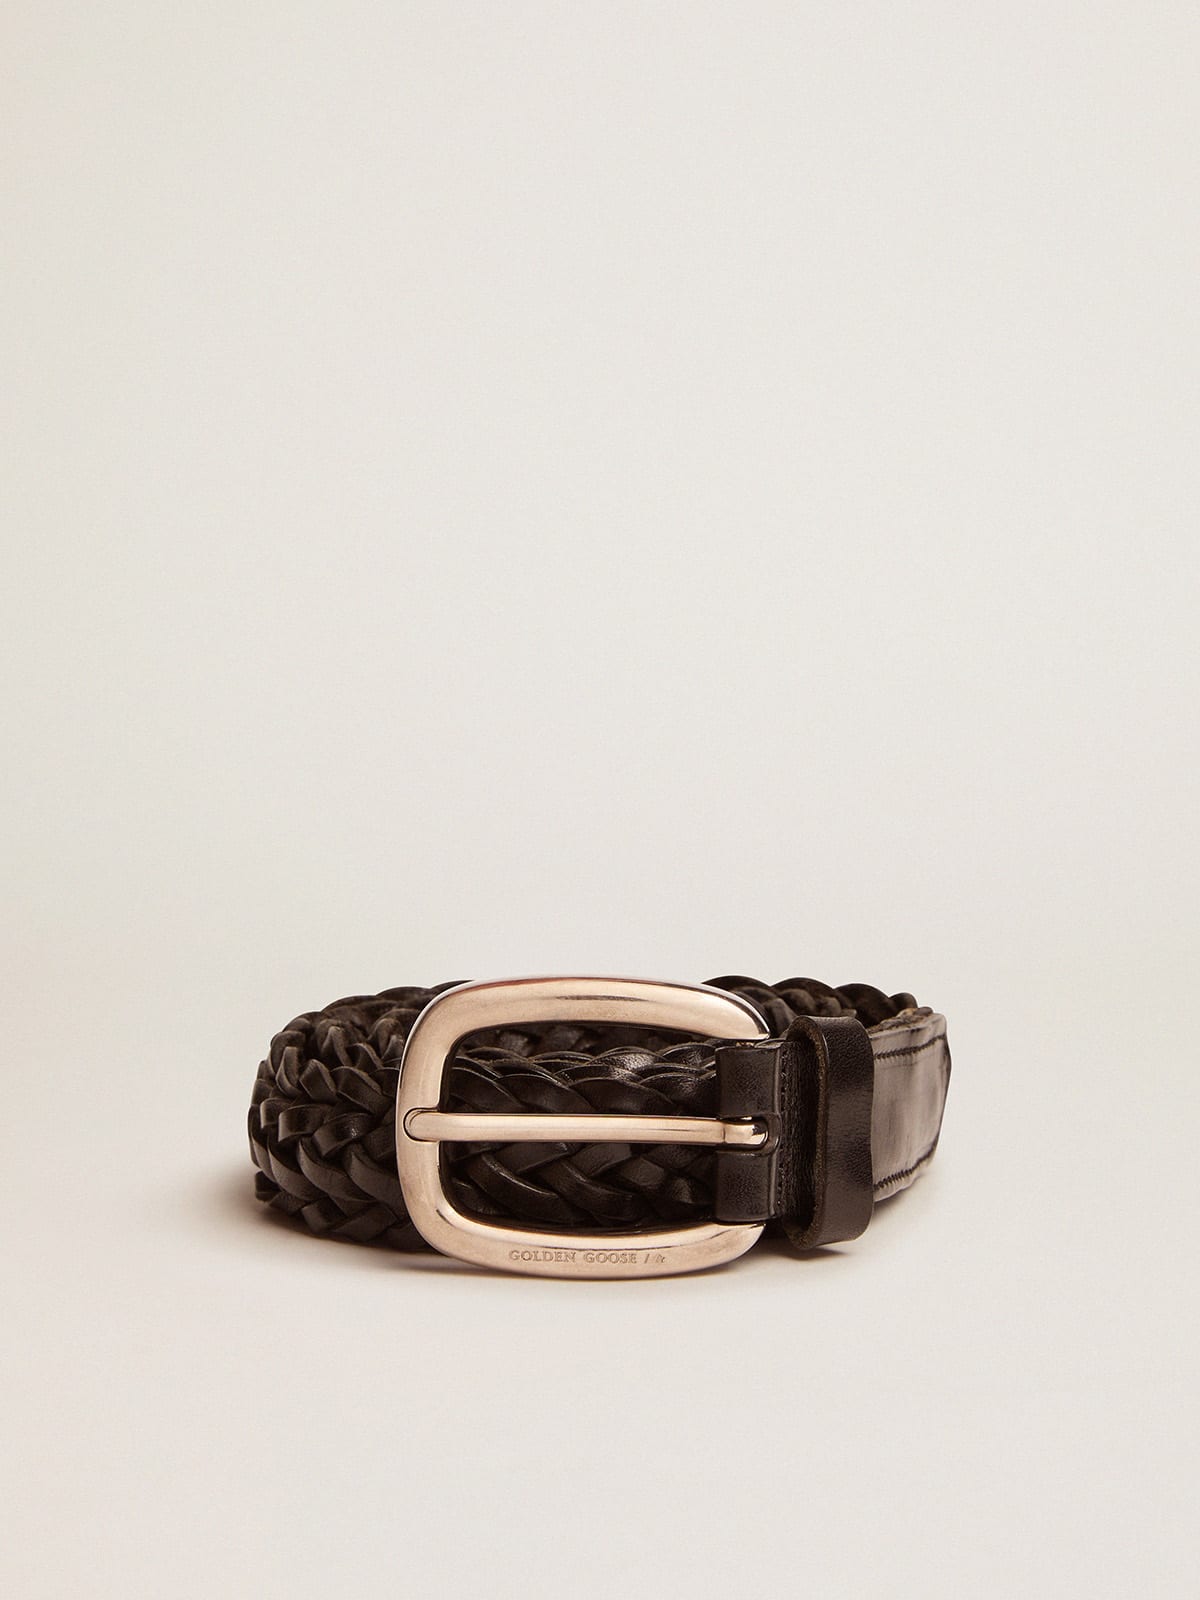 Men's belt in black braided leather